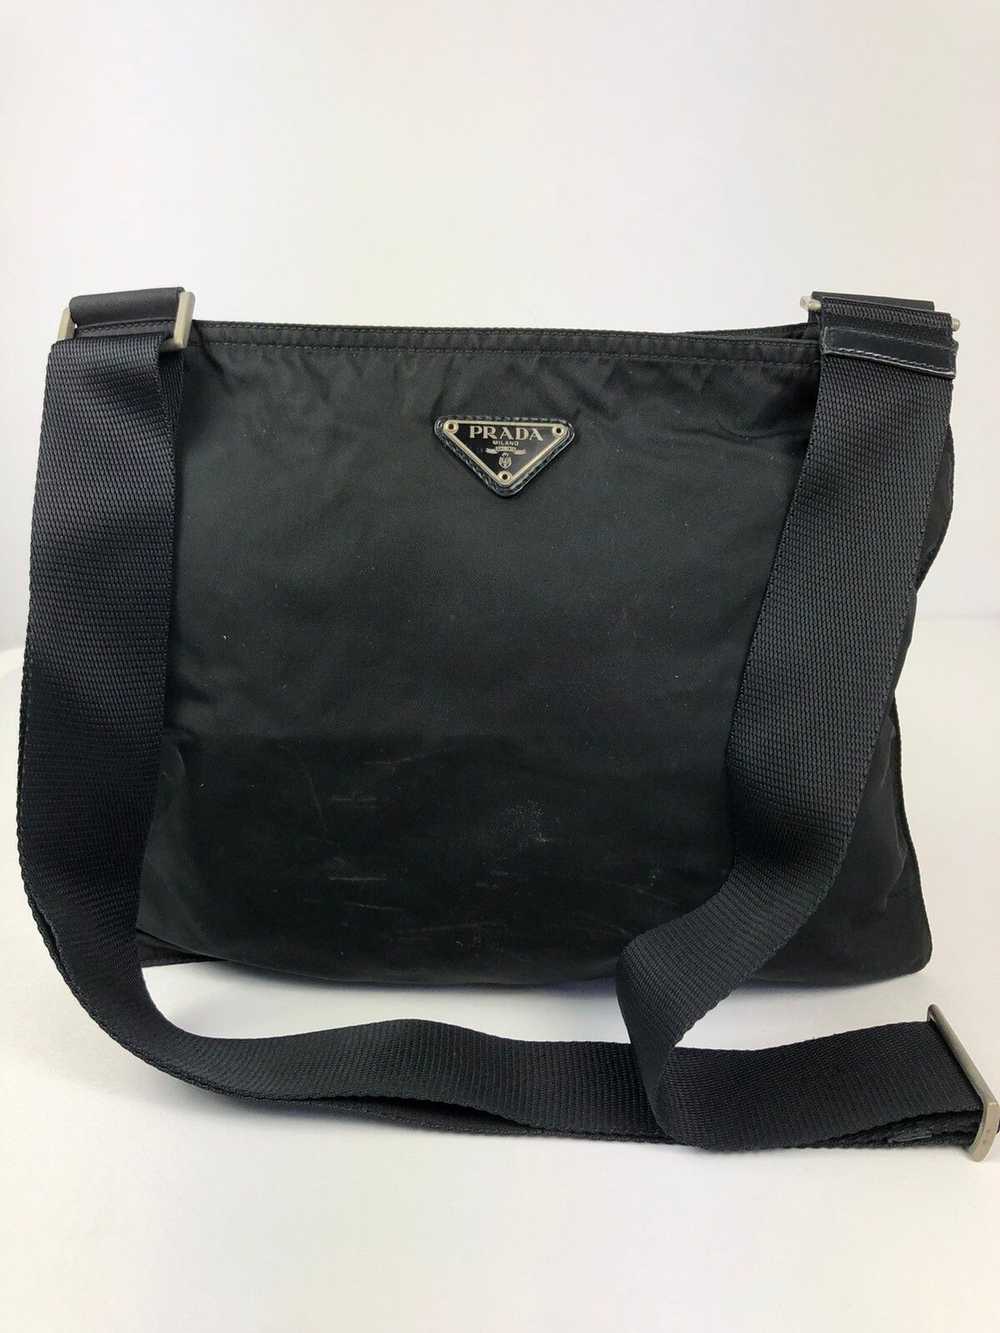 Prada Prada tessuto nero nylon crossbody bag - image 1